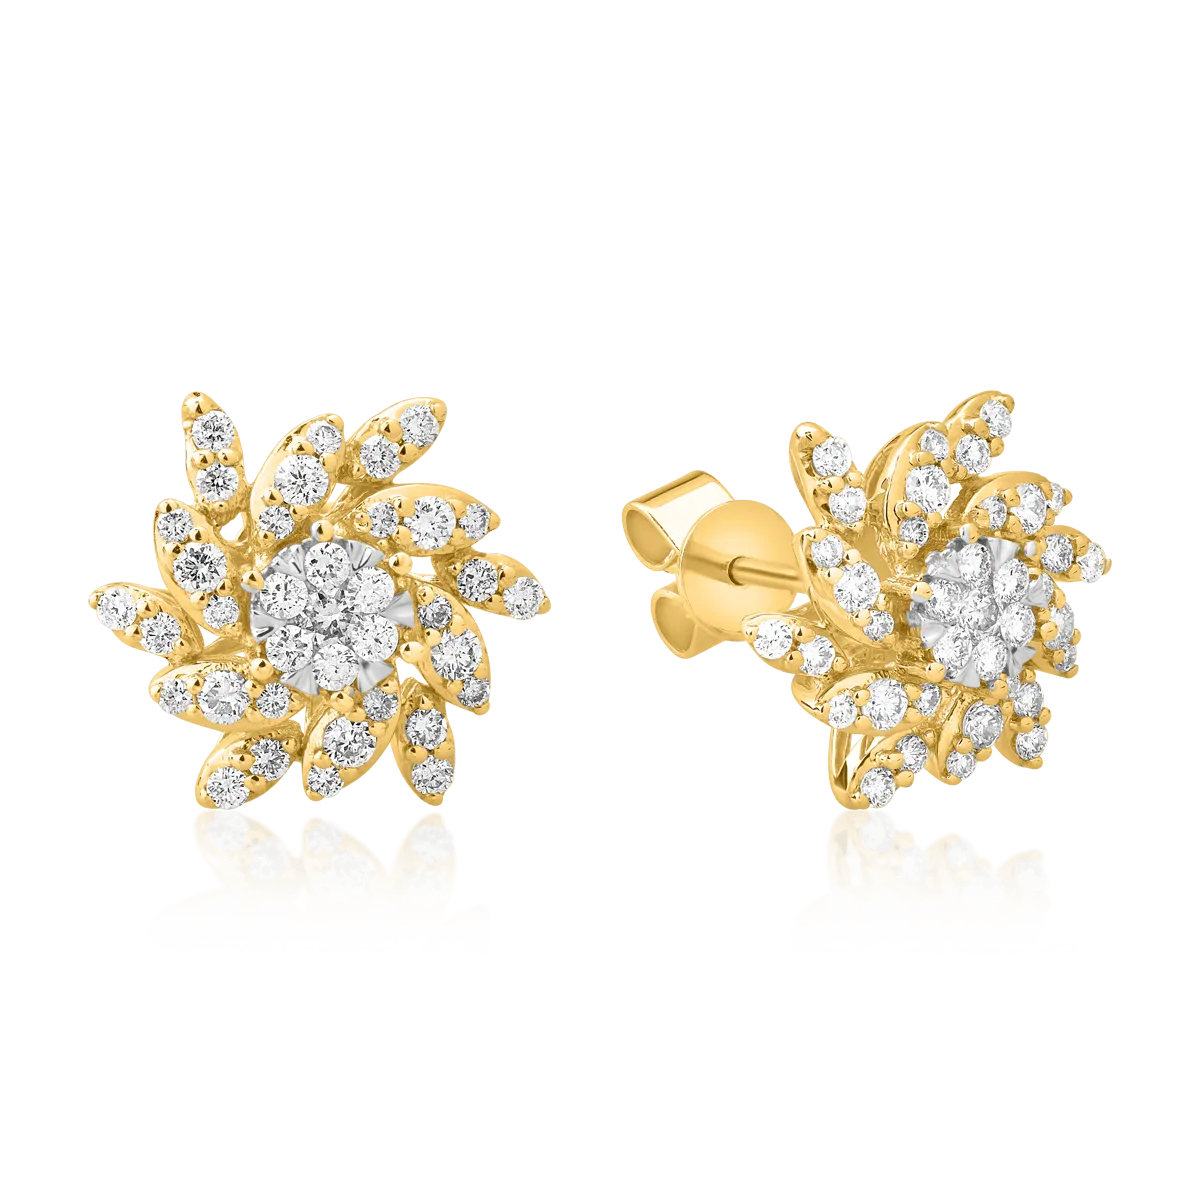 14K yellow gold earrings with 0.5ct diamonds